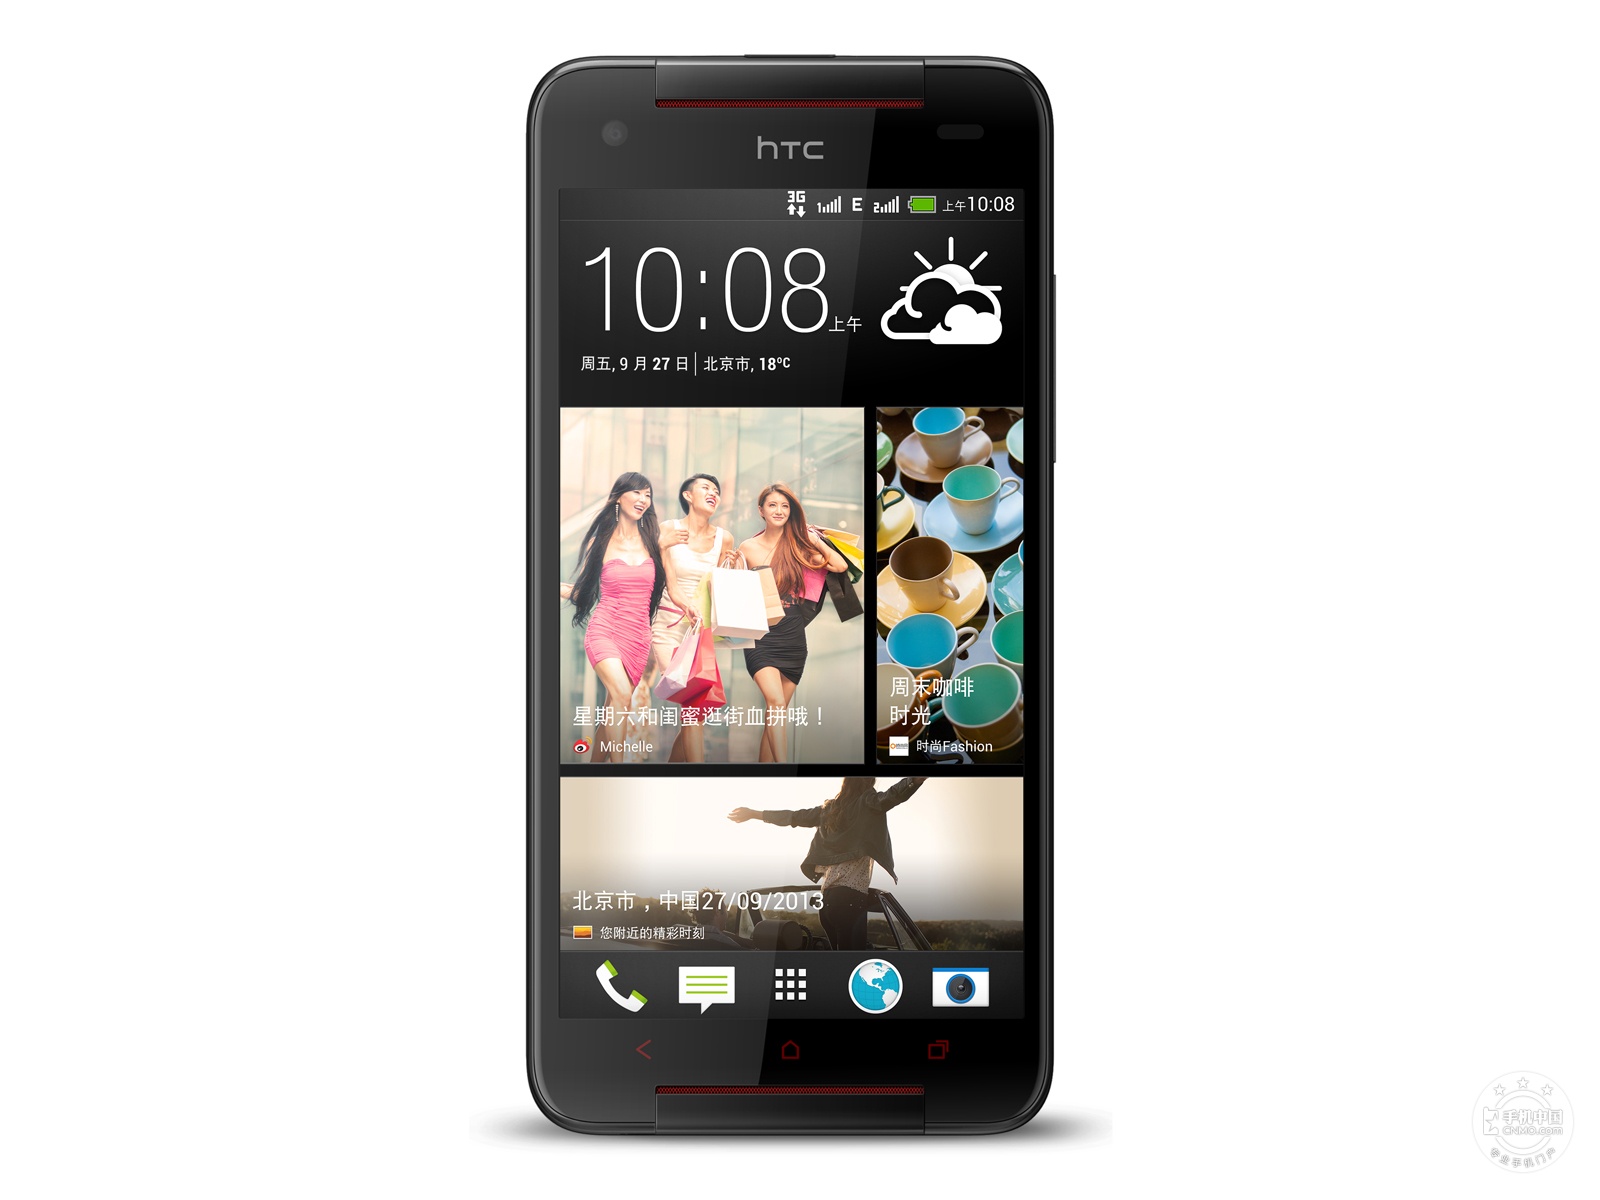 HTC9088